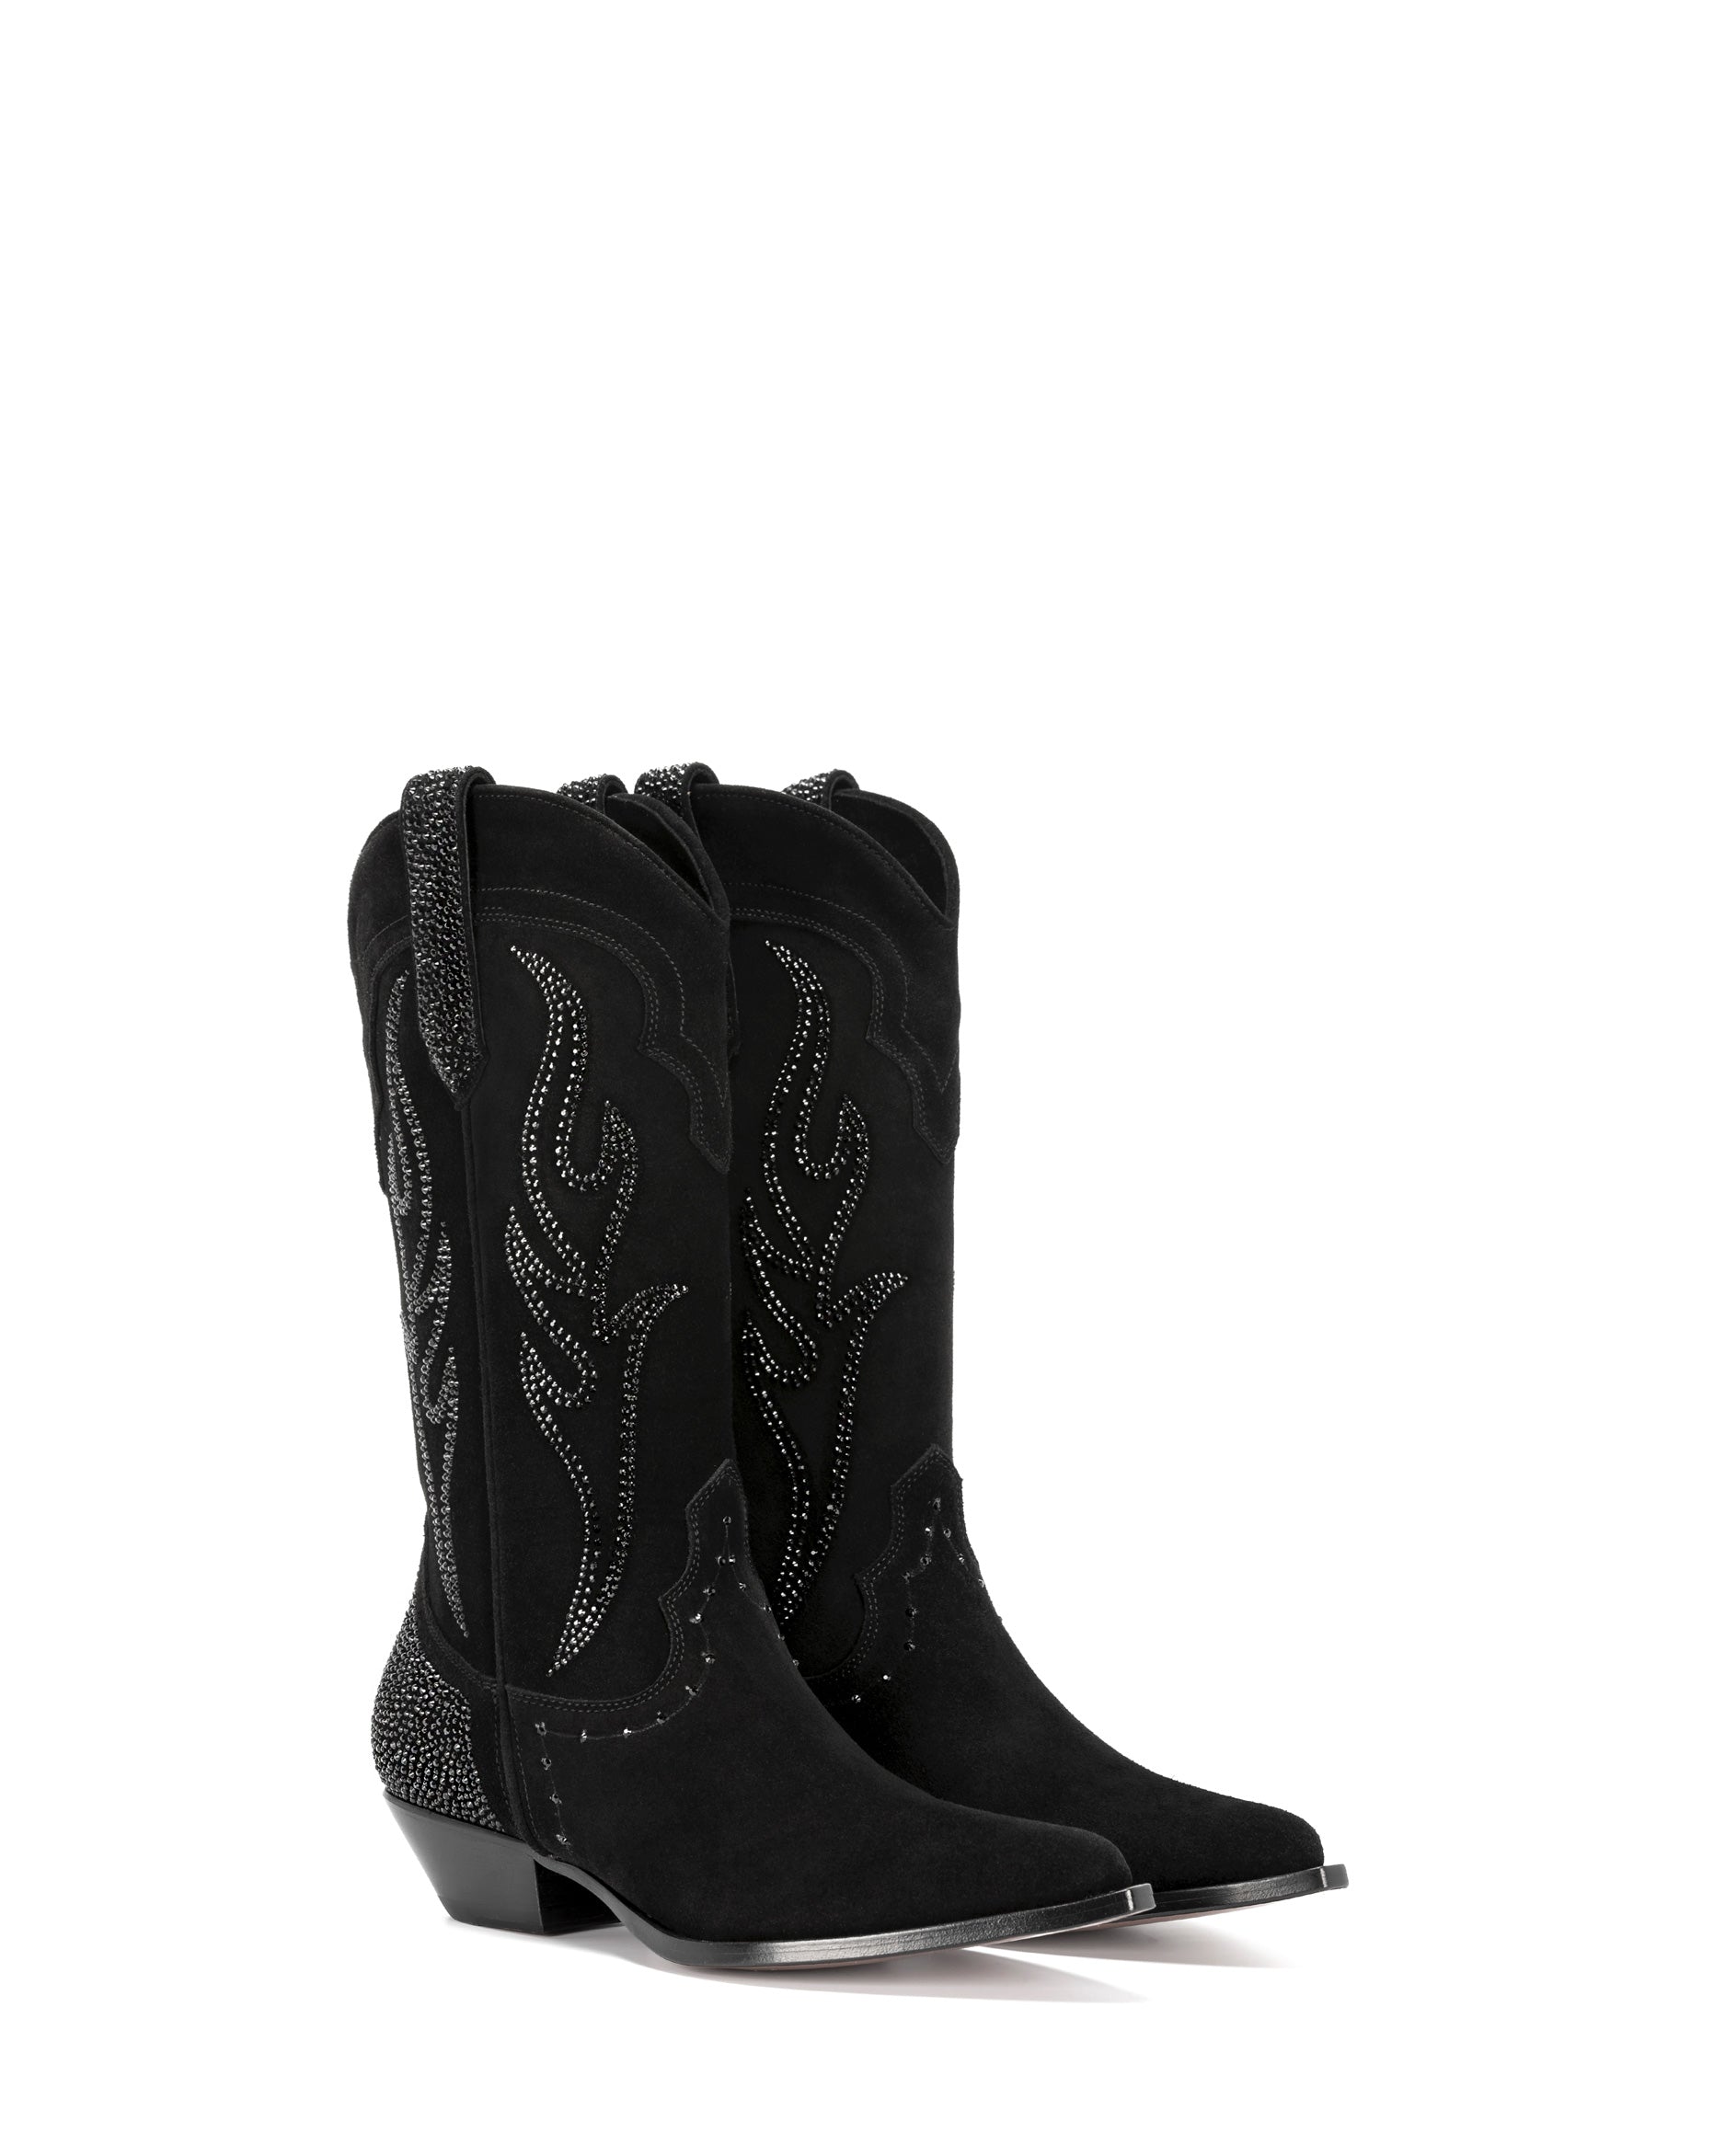     SANTA-FE-Women_s-Cowboy-Boots-in-Black-Suede-with-Black-Swarovski-Crystals_02_Front